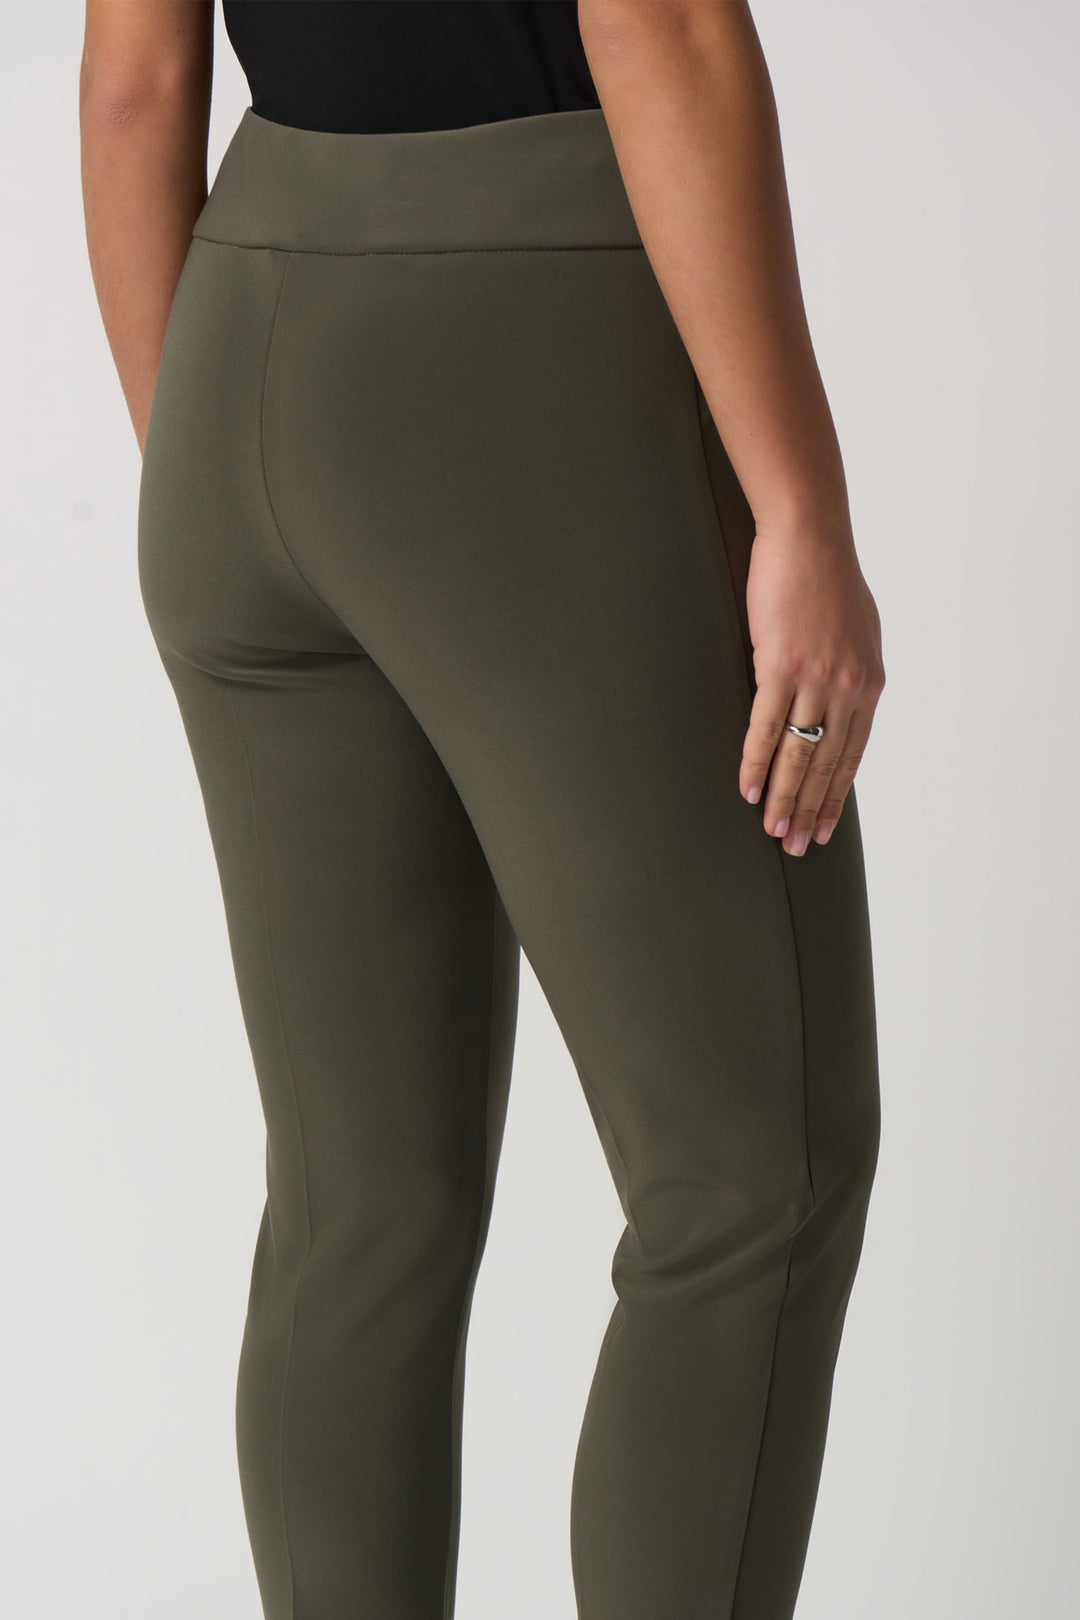 Joseph Ribkoff women's business casual slim fit basic pull-on pant - avocado